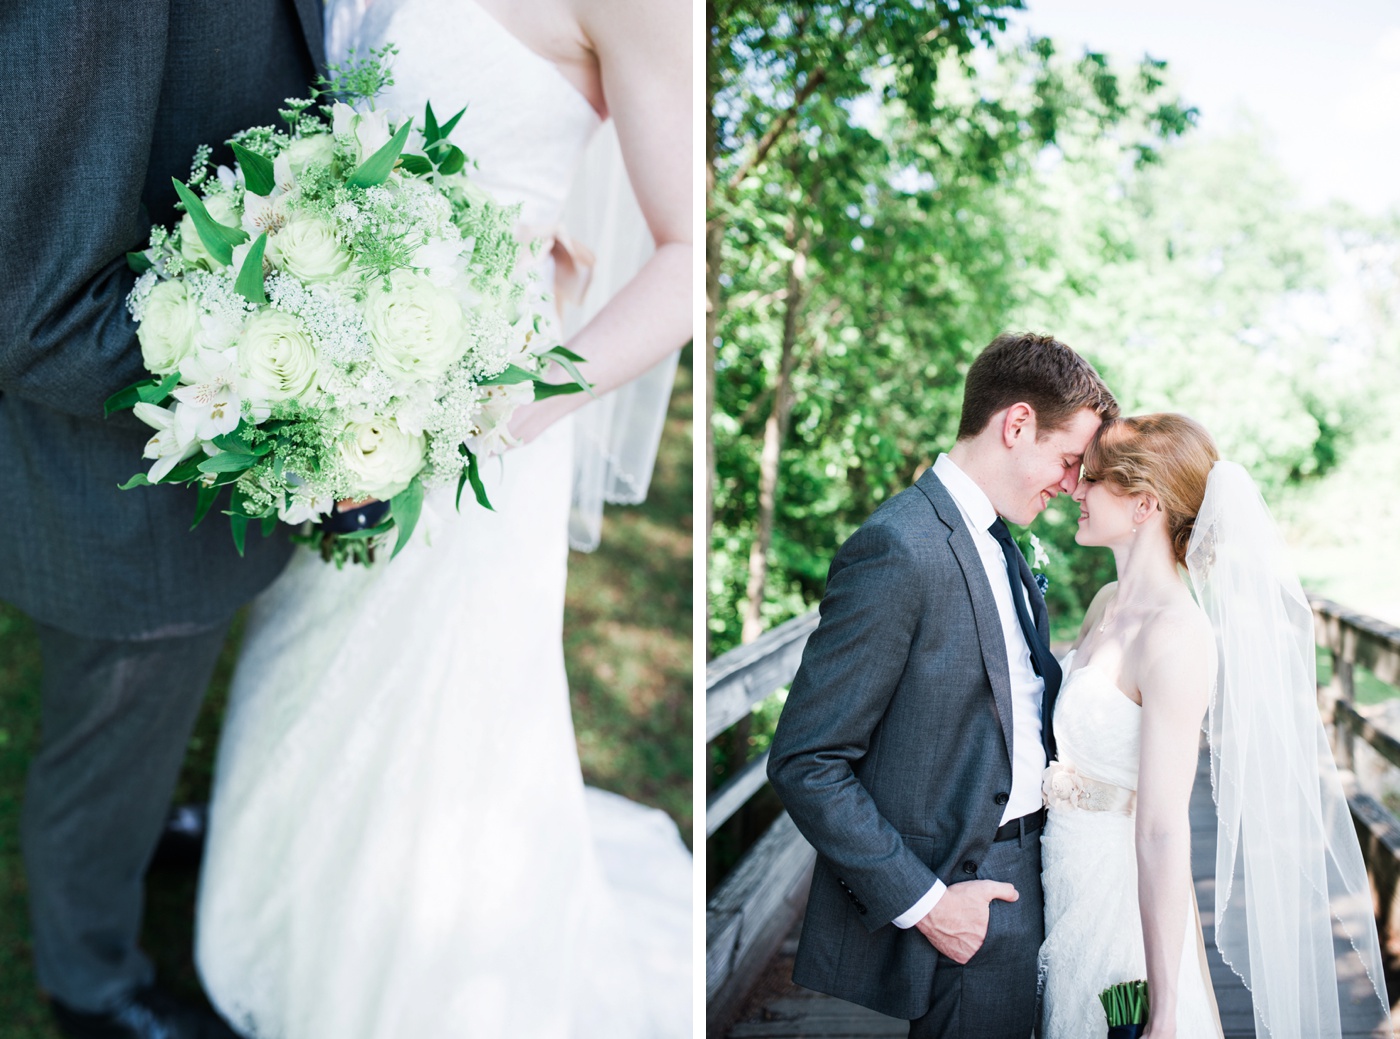 Kristen + Josh - Olde Homestead Golf Club Wedding - New Tripoli Pennsylvania Photographer - Alison Dunn Photography